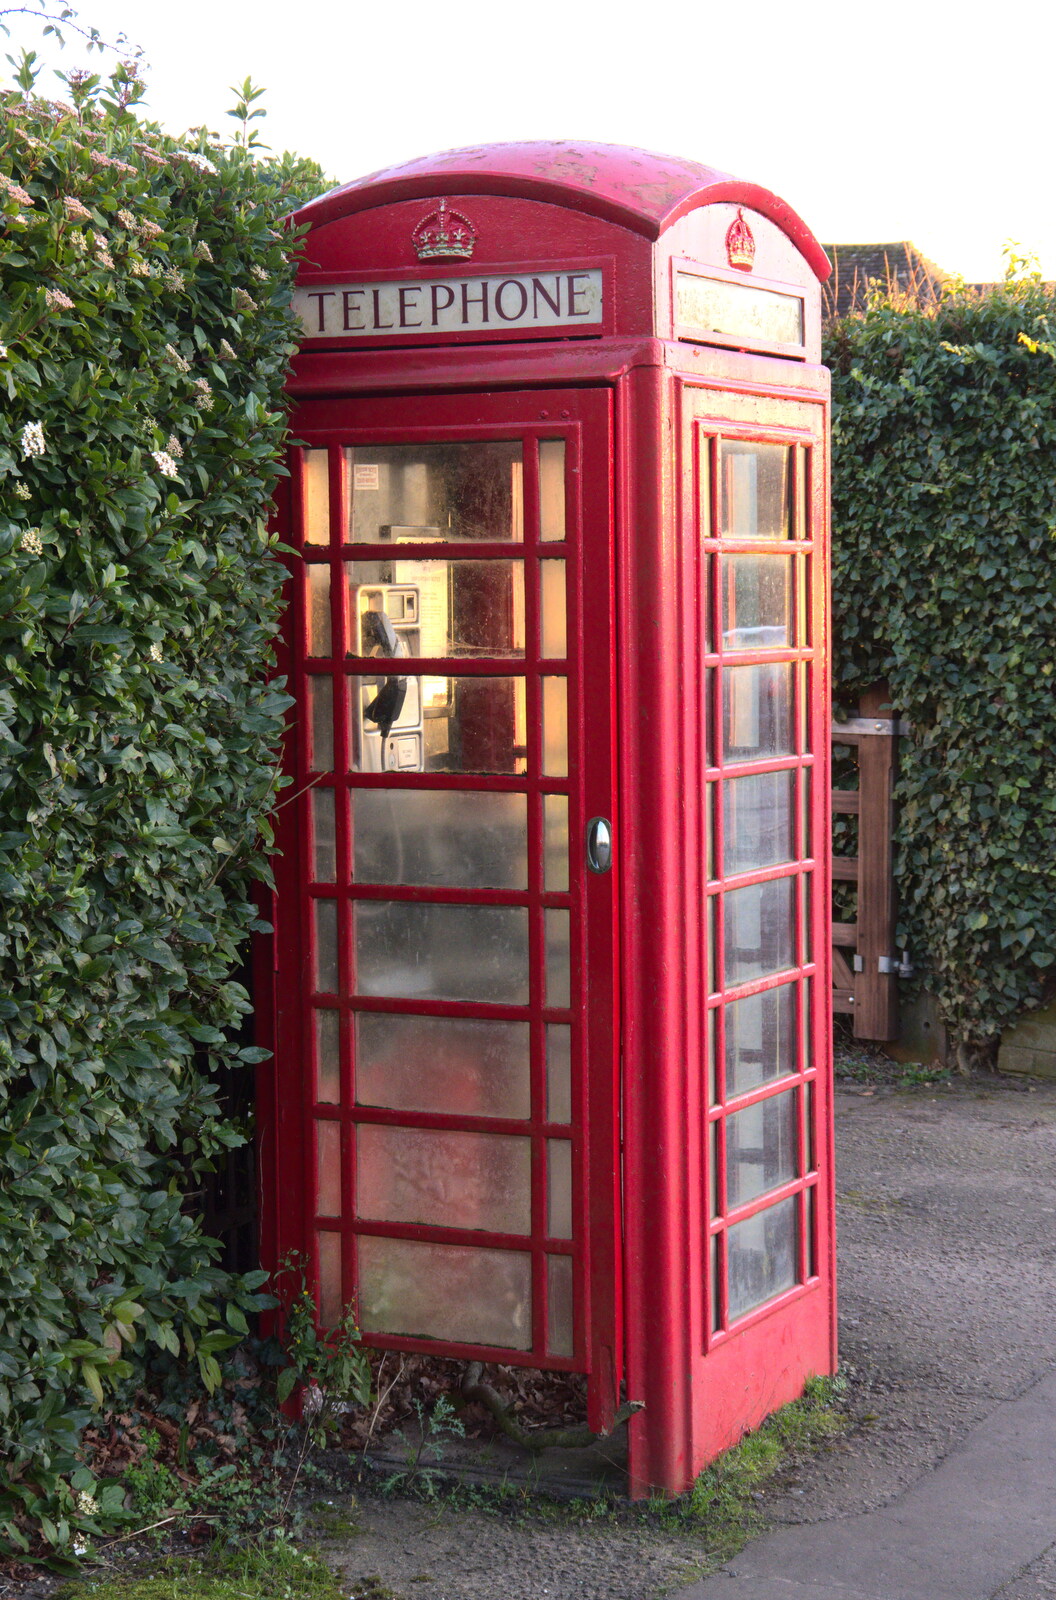 A red K6 phone box from Snowdrops at Talconeston Hall, Tacolneston, Norfolk - 7th February 2020